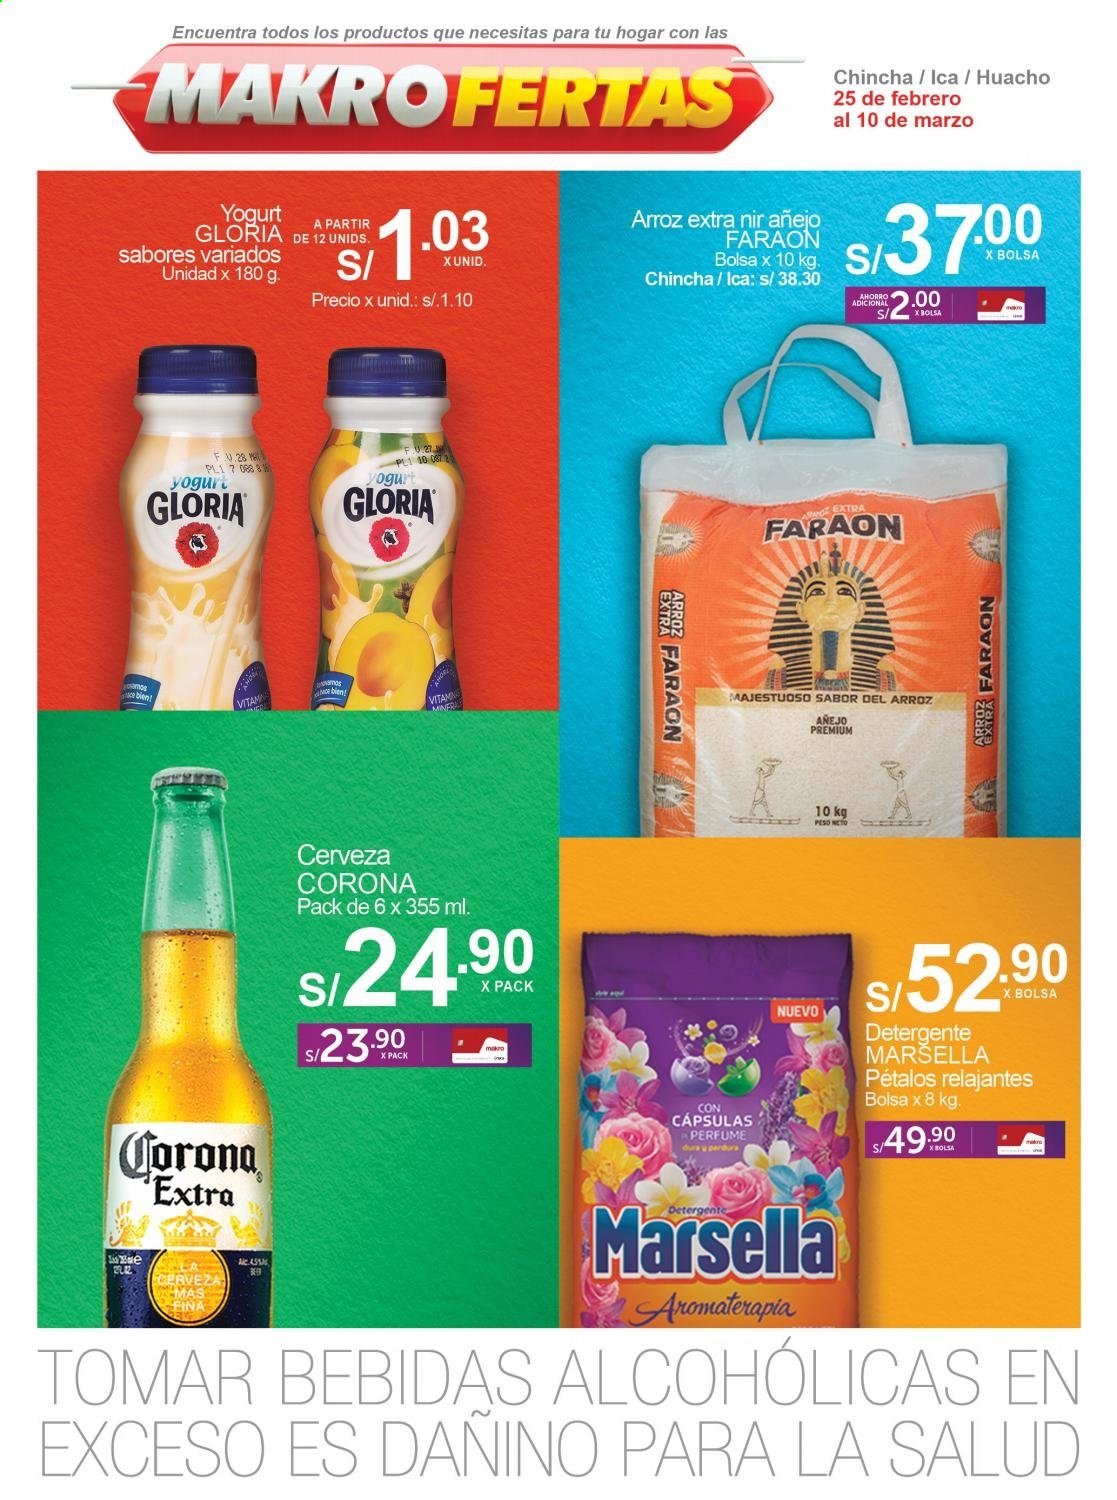 thumbnail - Folleto actual Makro - 25.2.2021 - 10.3.2021 - Ventas - Corona, cerveza, yogur, arroz, bebida, bebida alcohólica, detergente, perfume. Página 1.